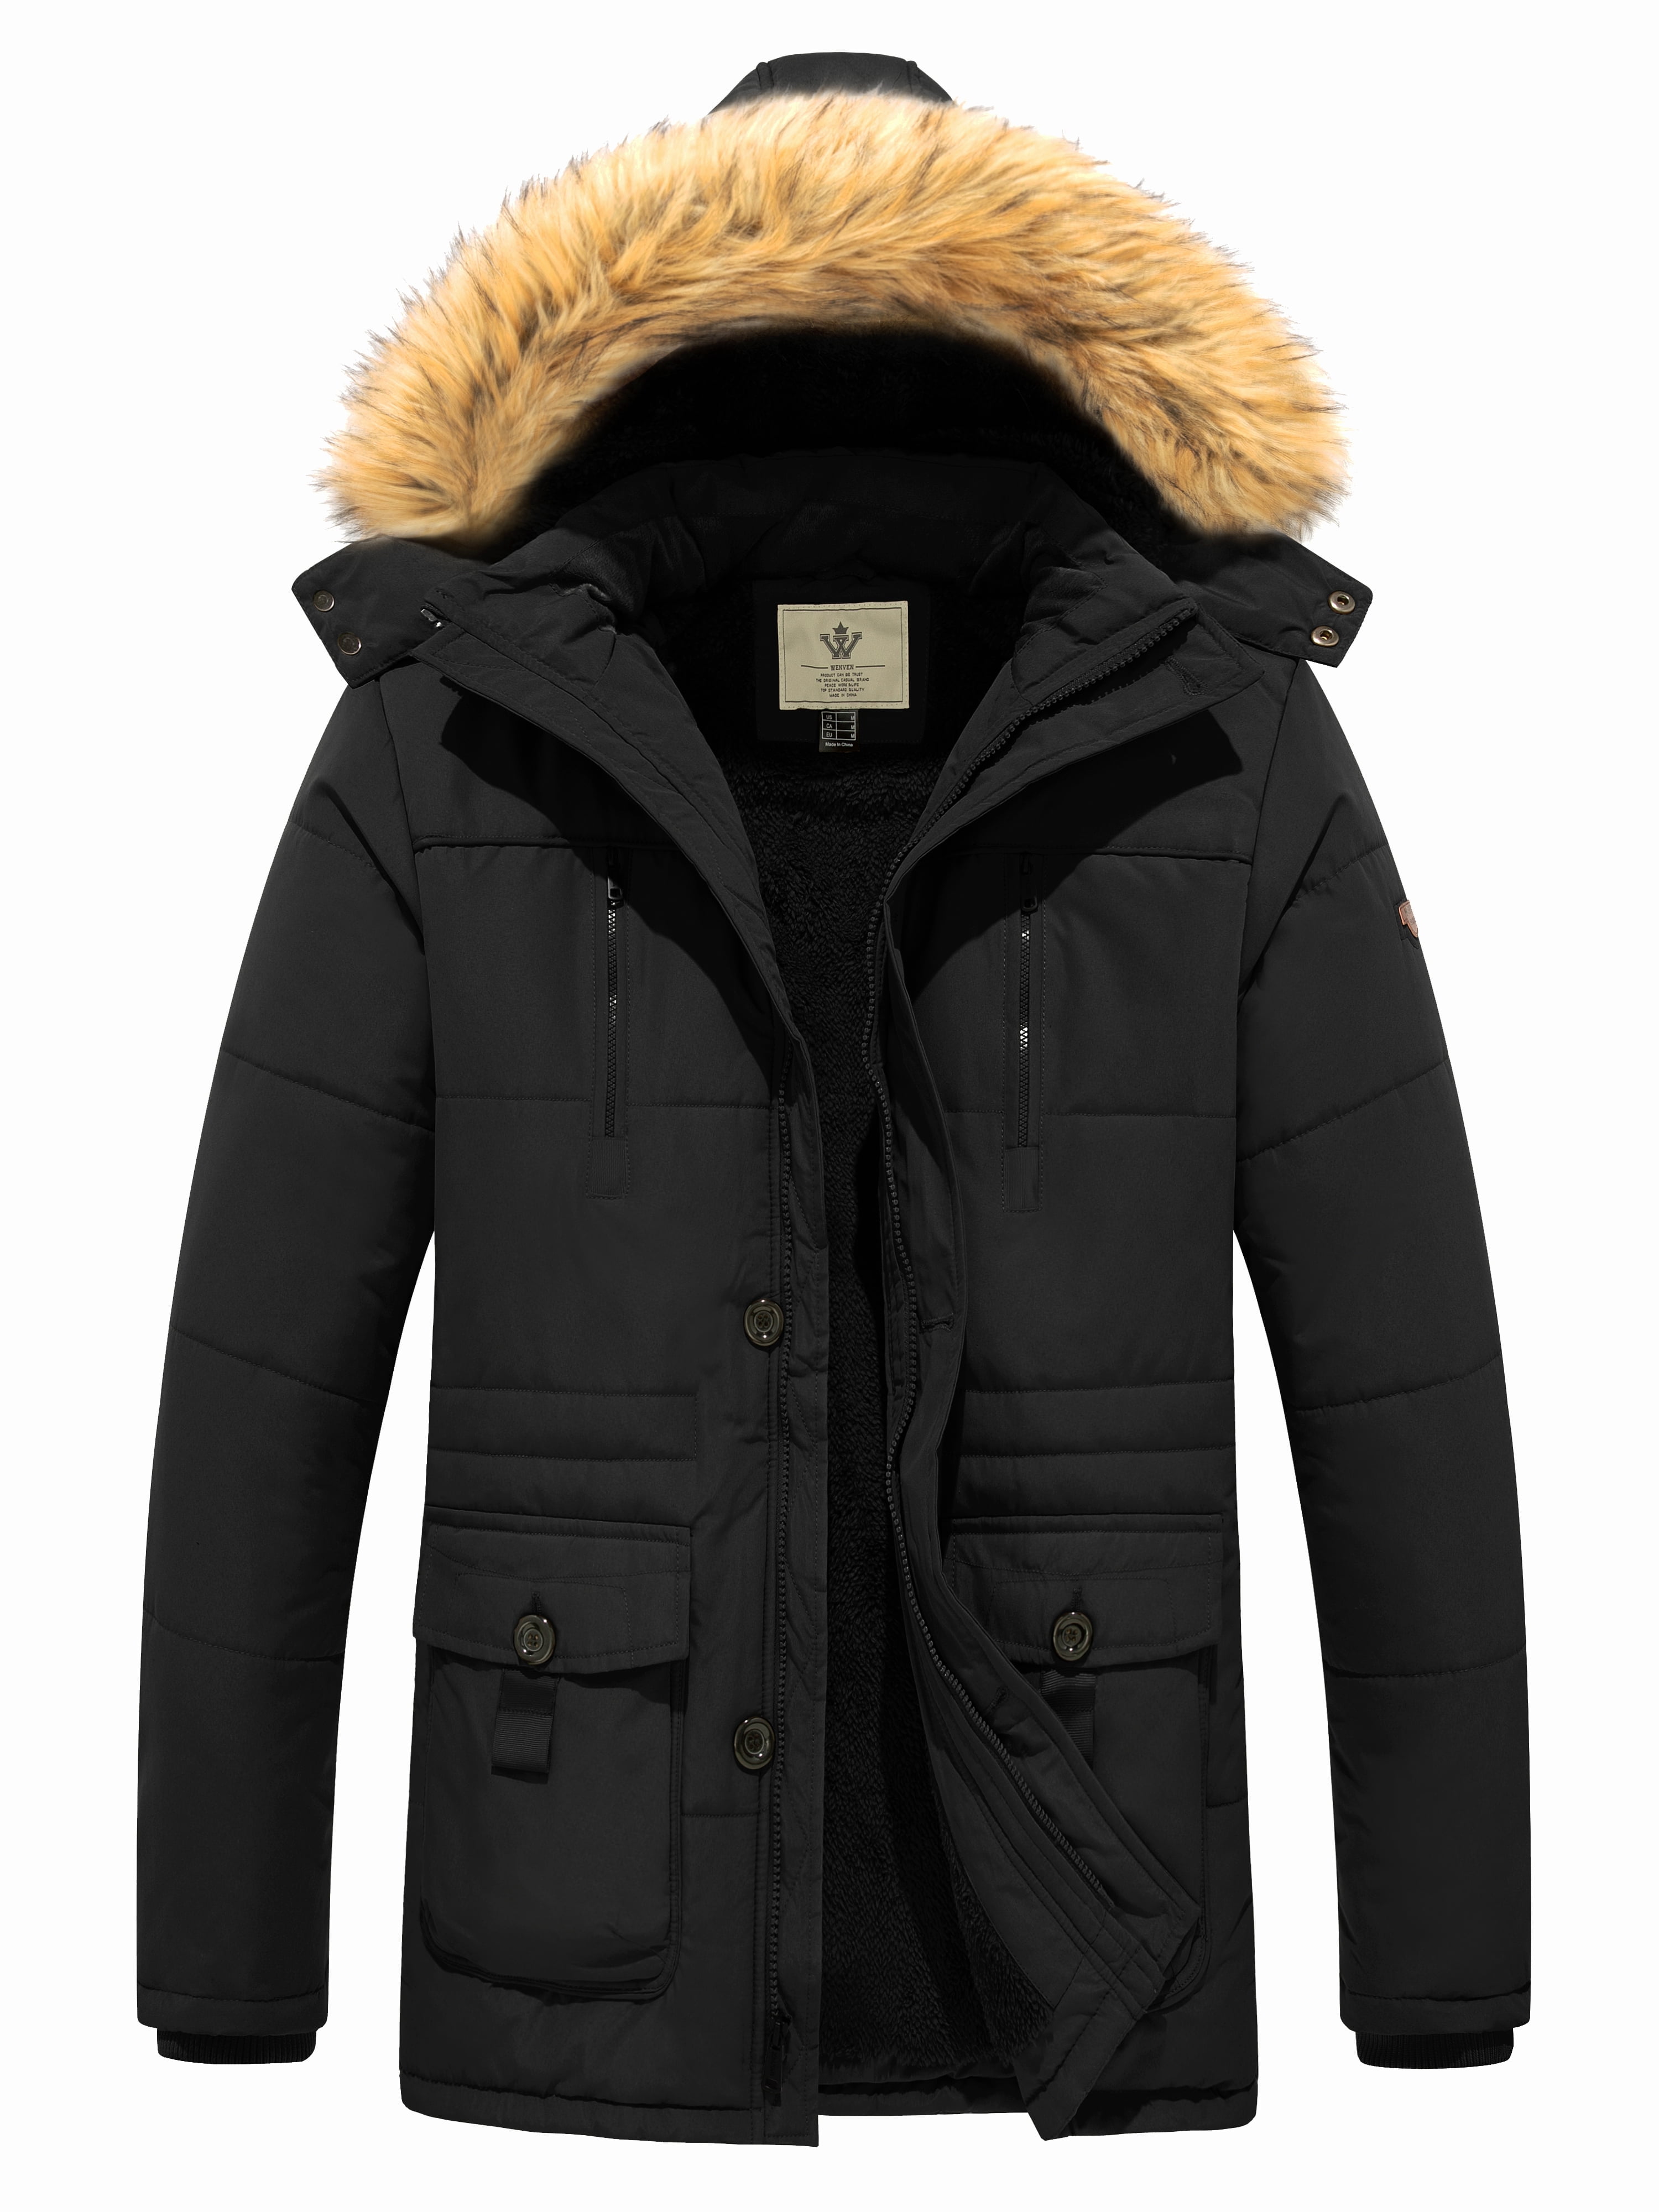 WenVen Men's Hooded Warm Coat Winter Parka Jacket Black L - Walmart.com